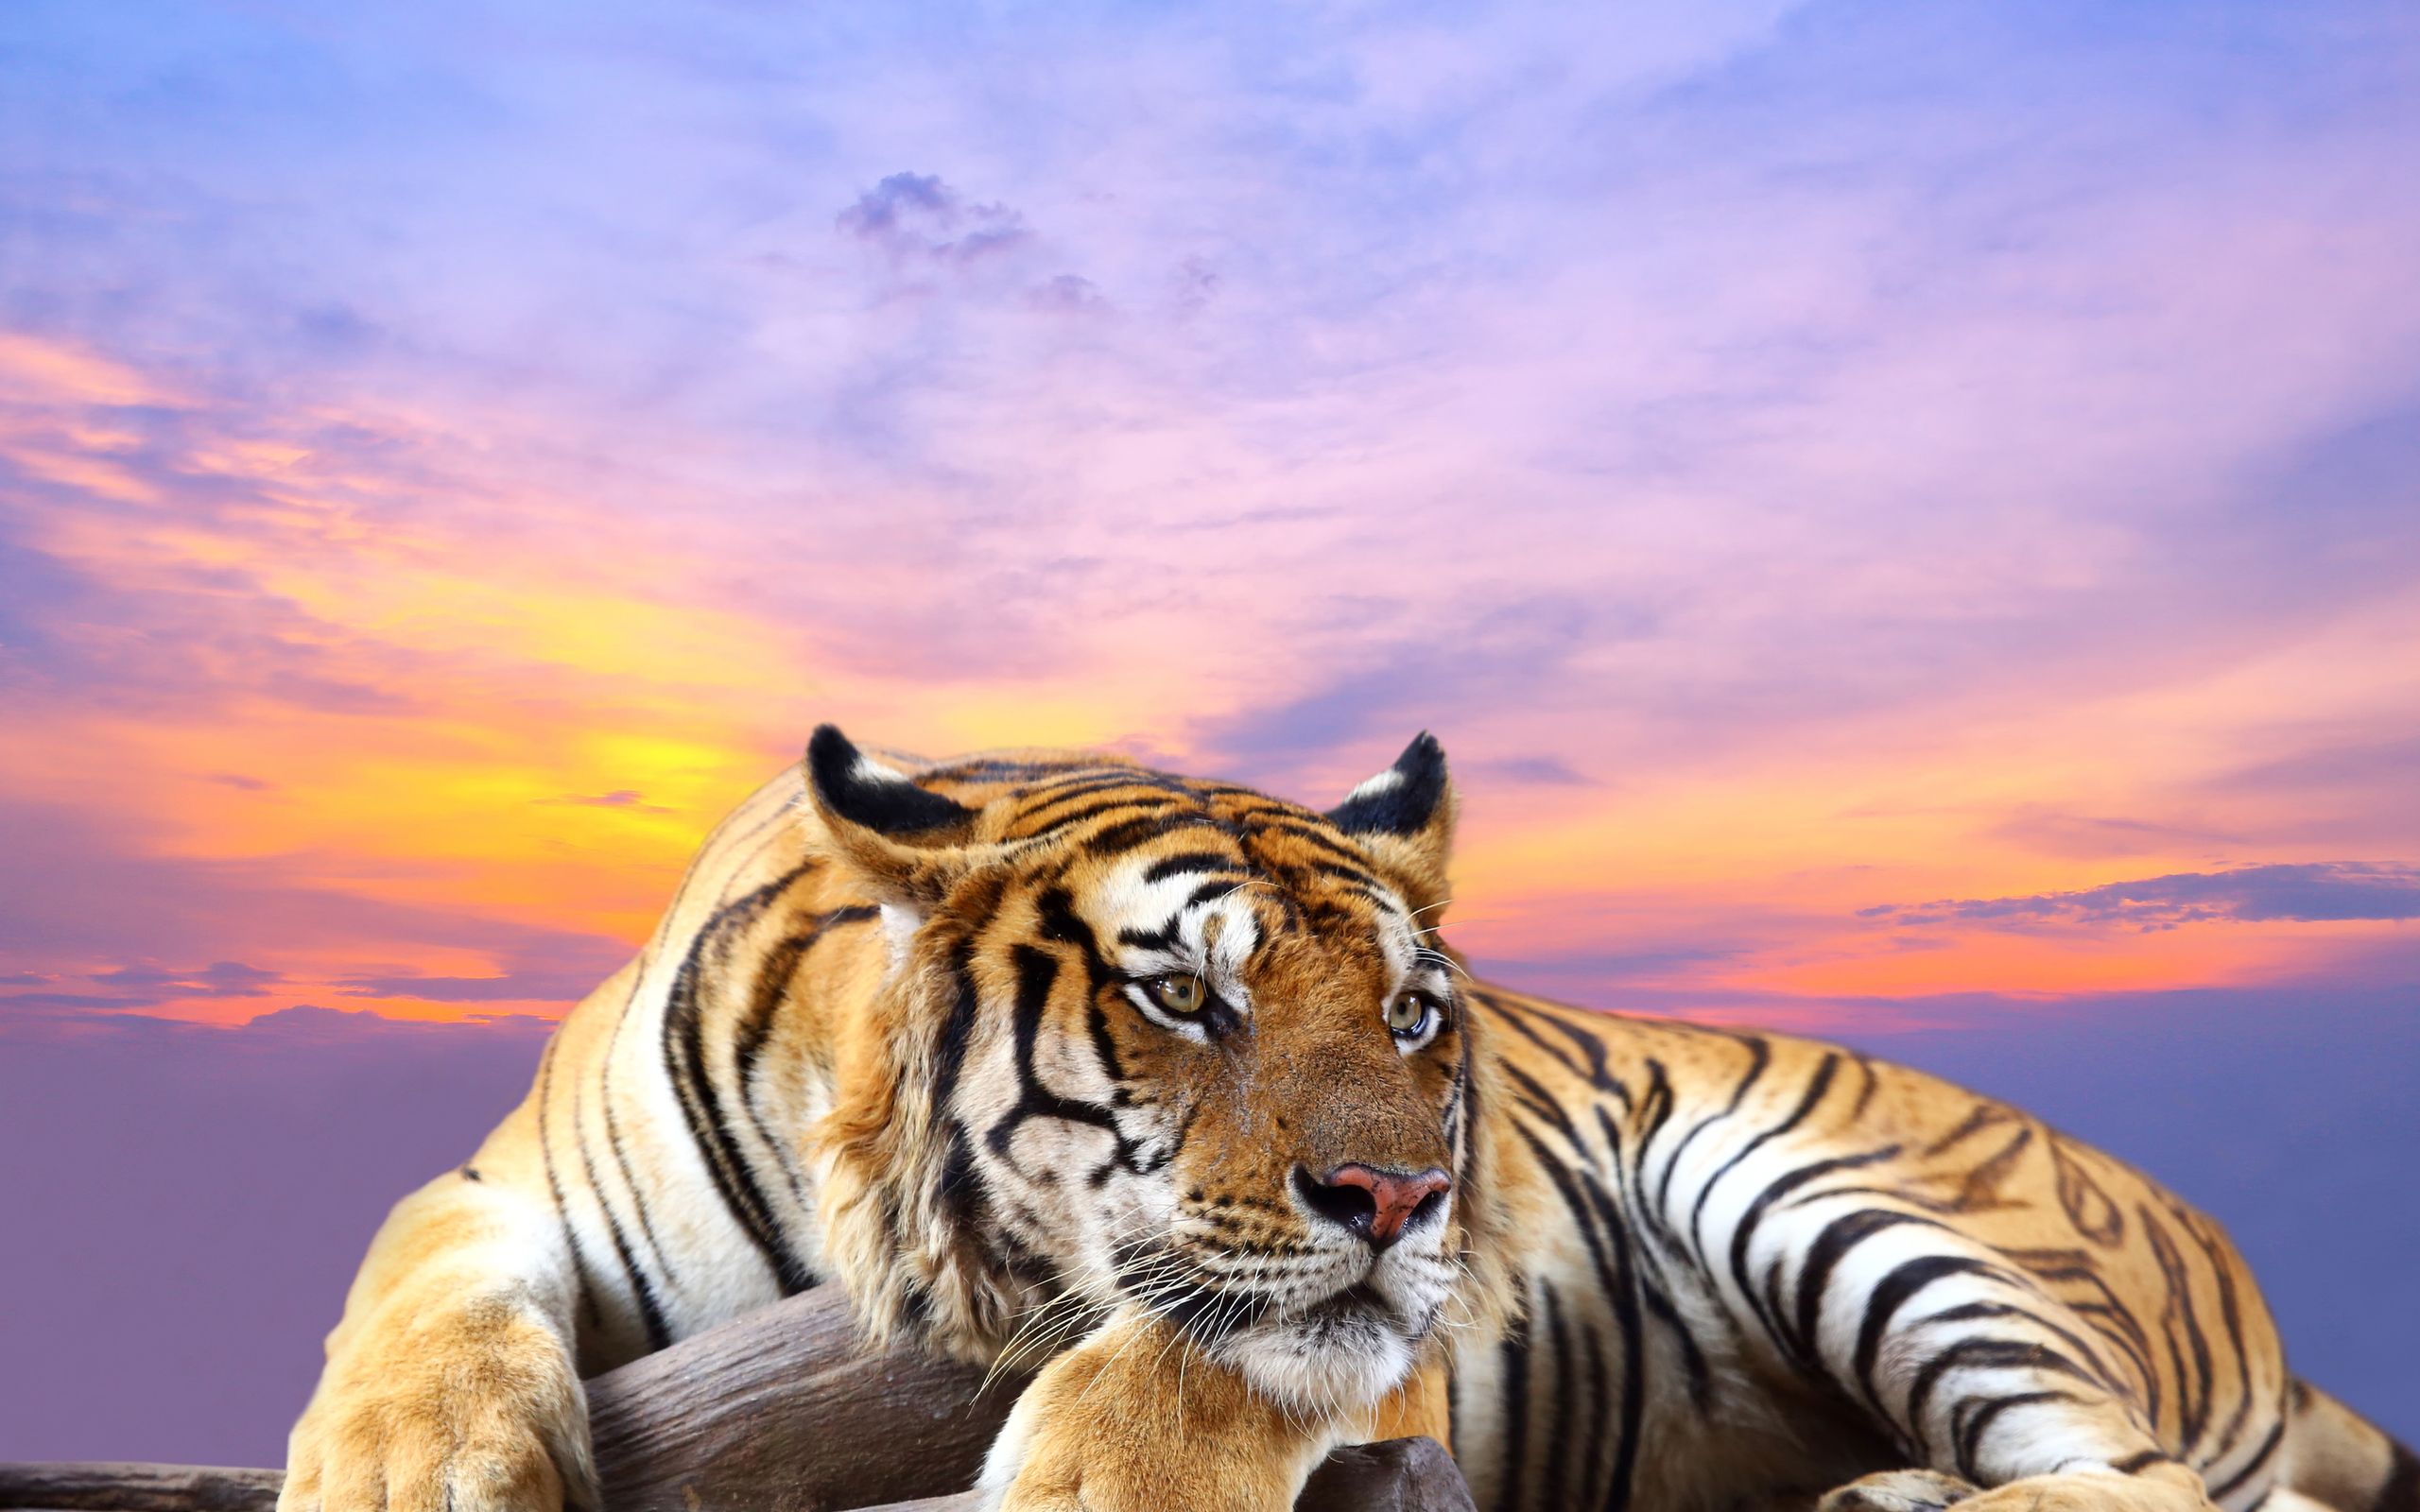 Tiger at sunset 4K Ultra HD wallpaper